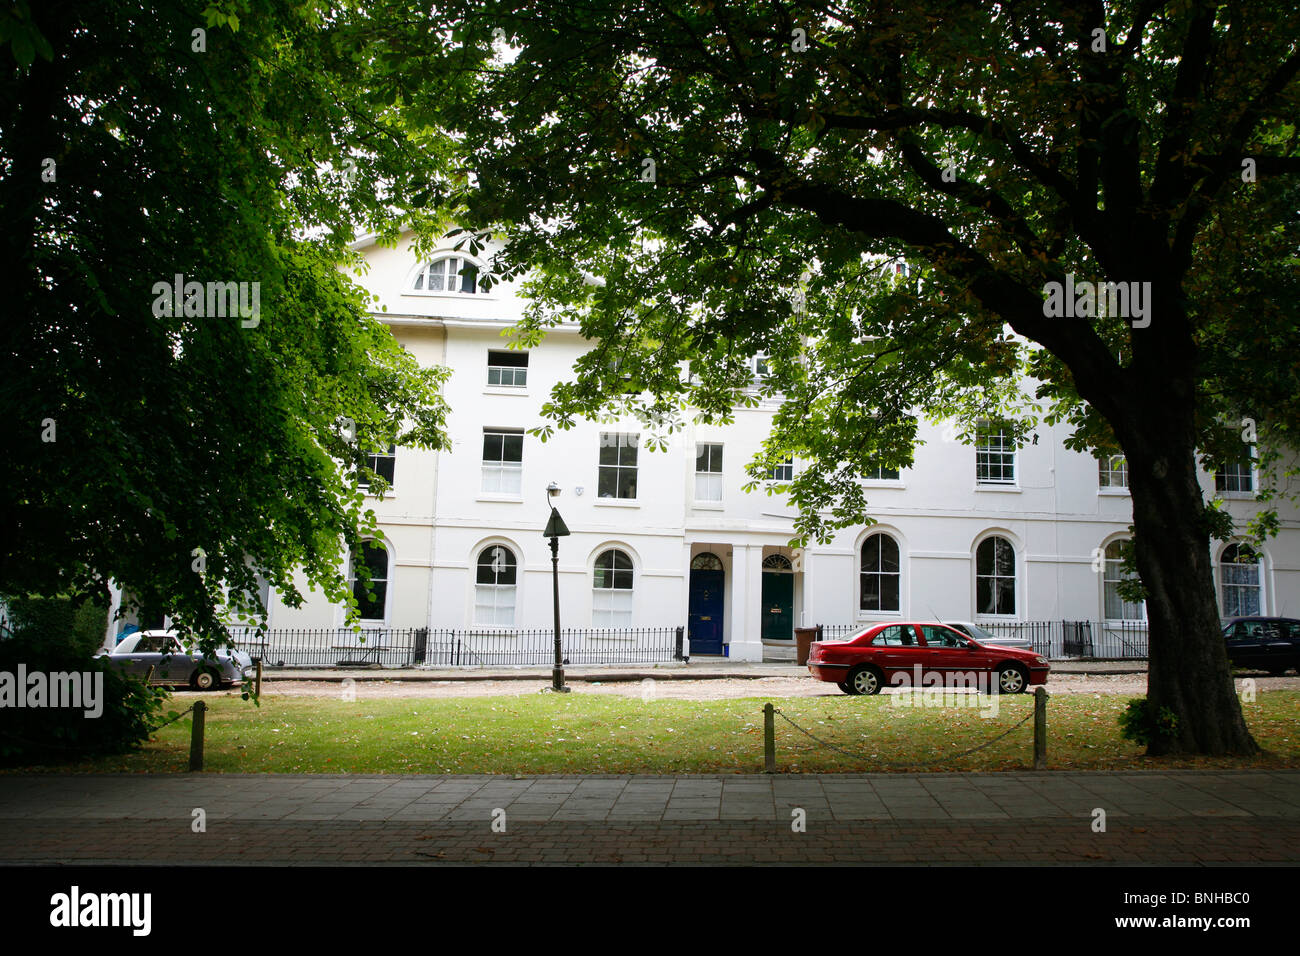 Logement géorgienne sur Camberwell Grove, Camberwell, London, UK Banque D'Images